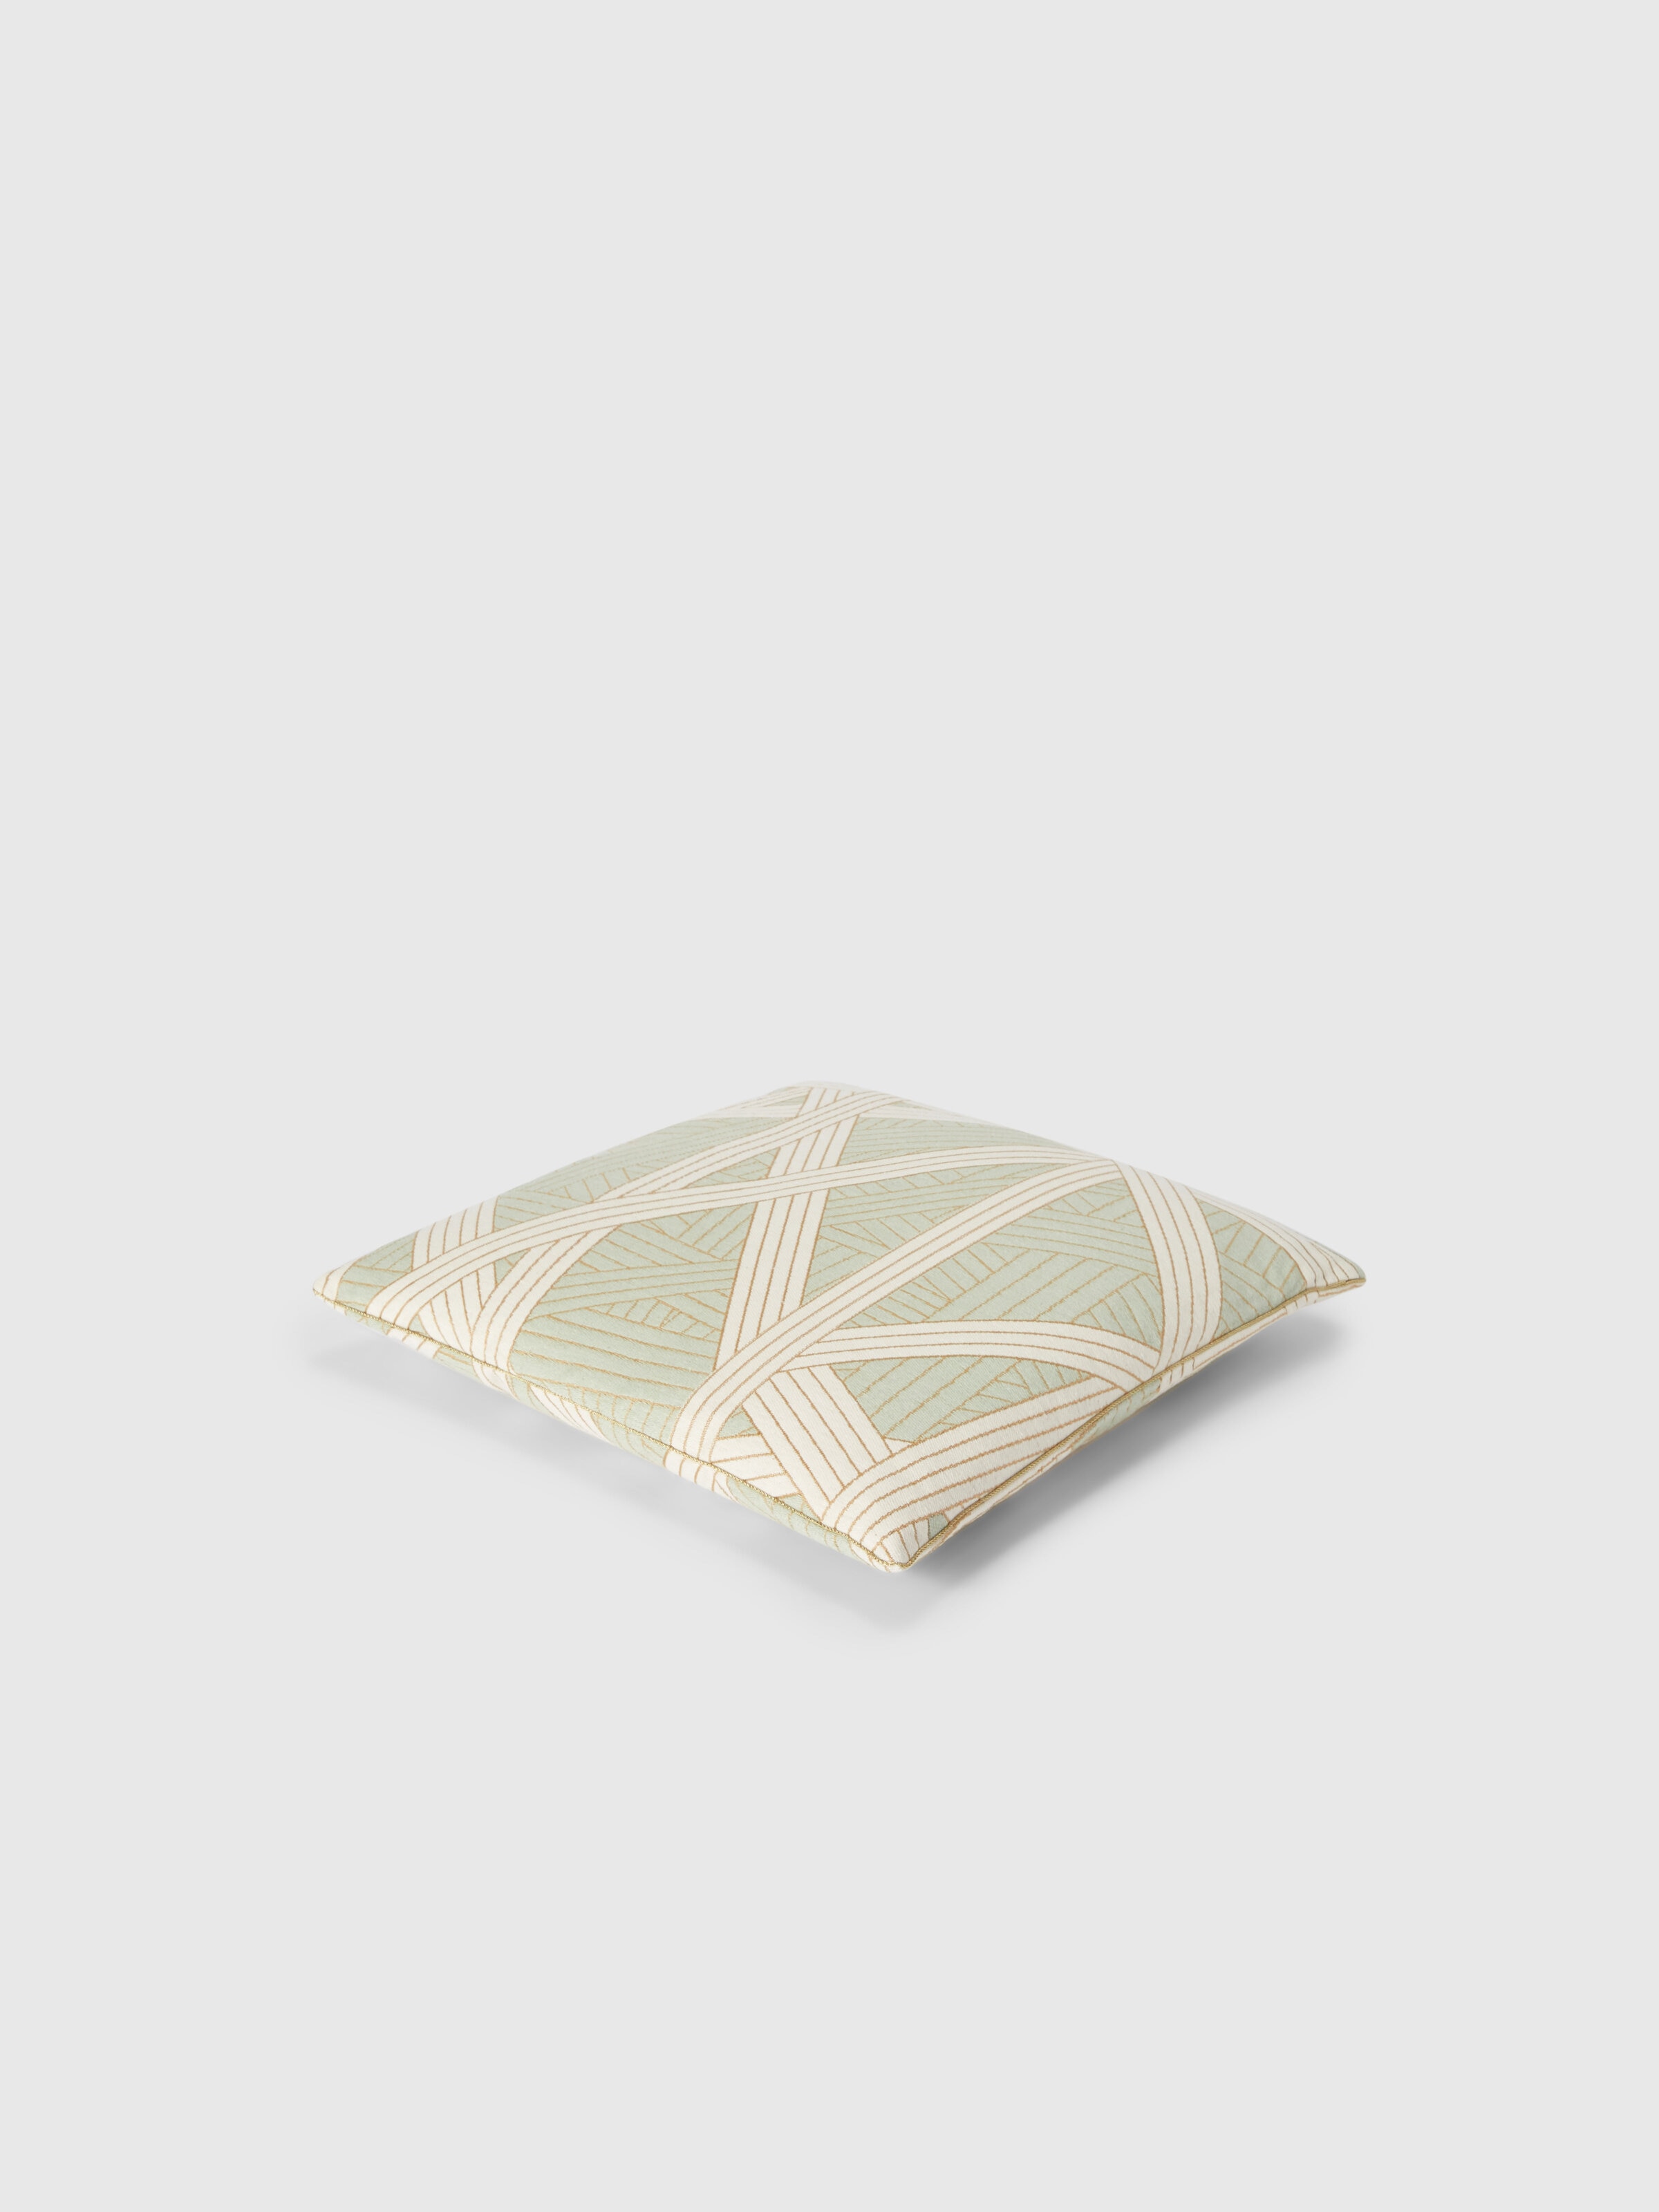 Nastri cushion 40x40 cm with stitching, Green - 1